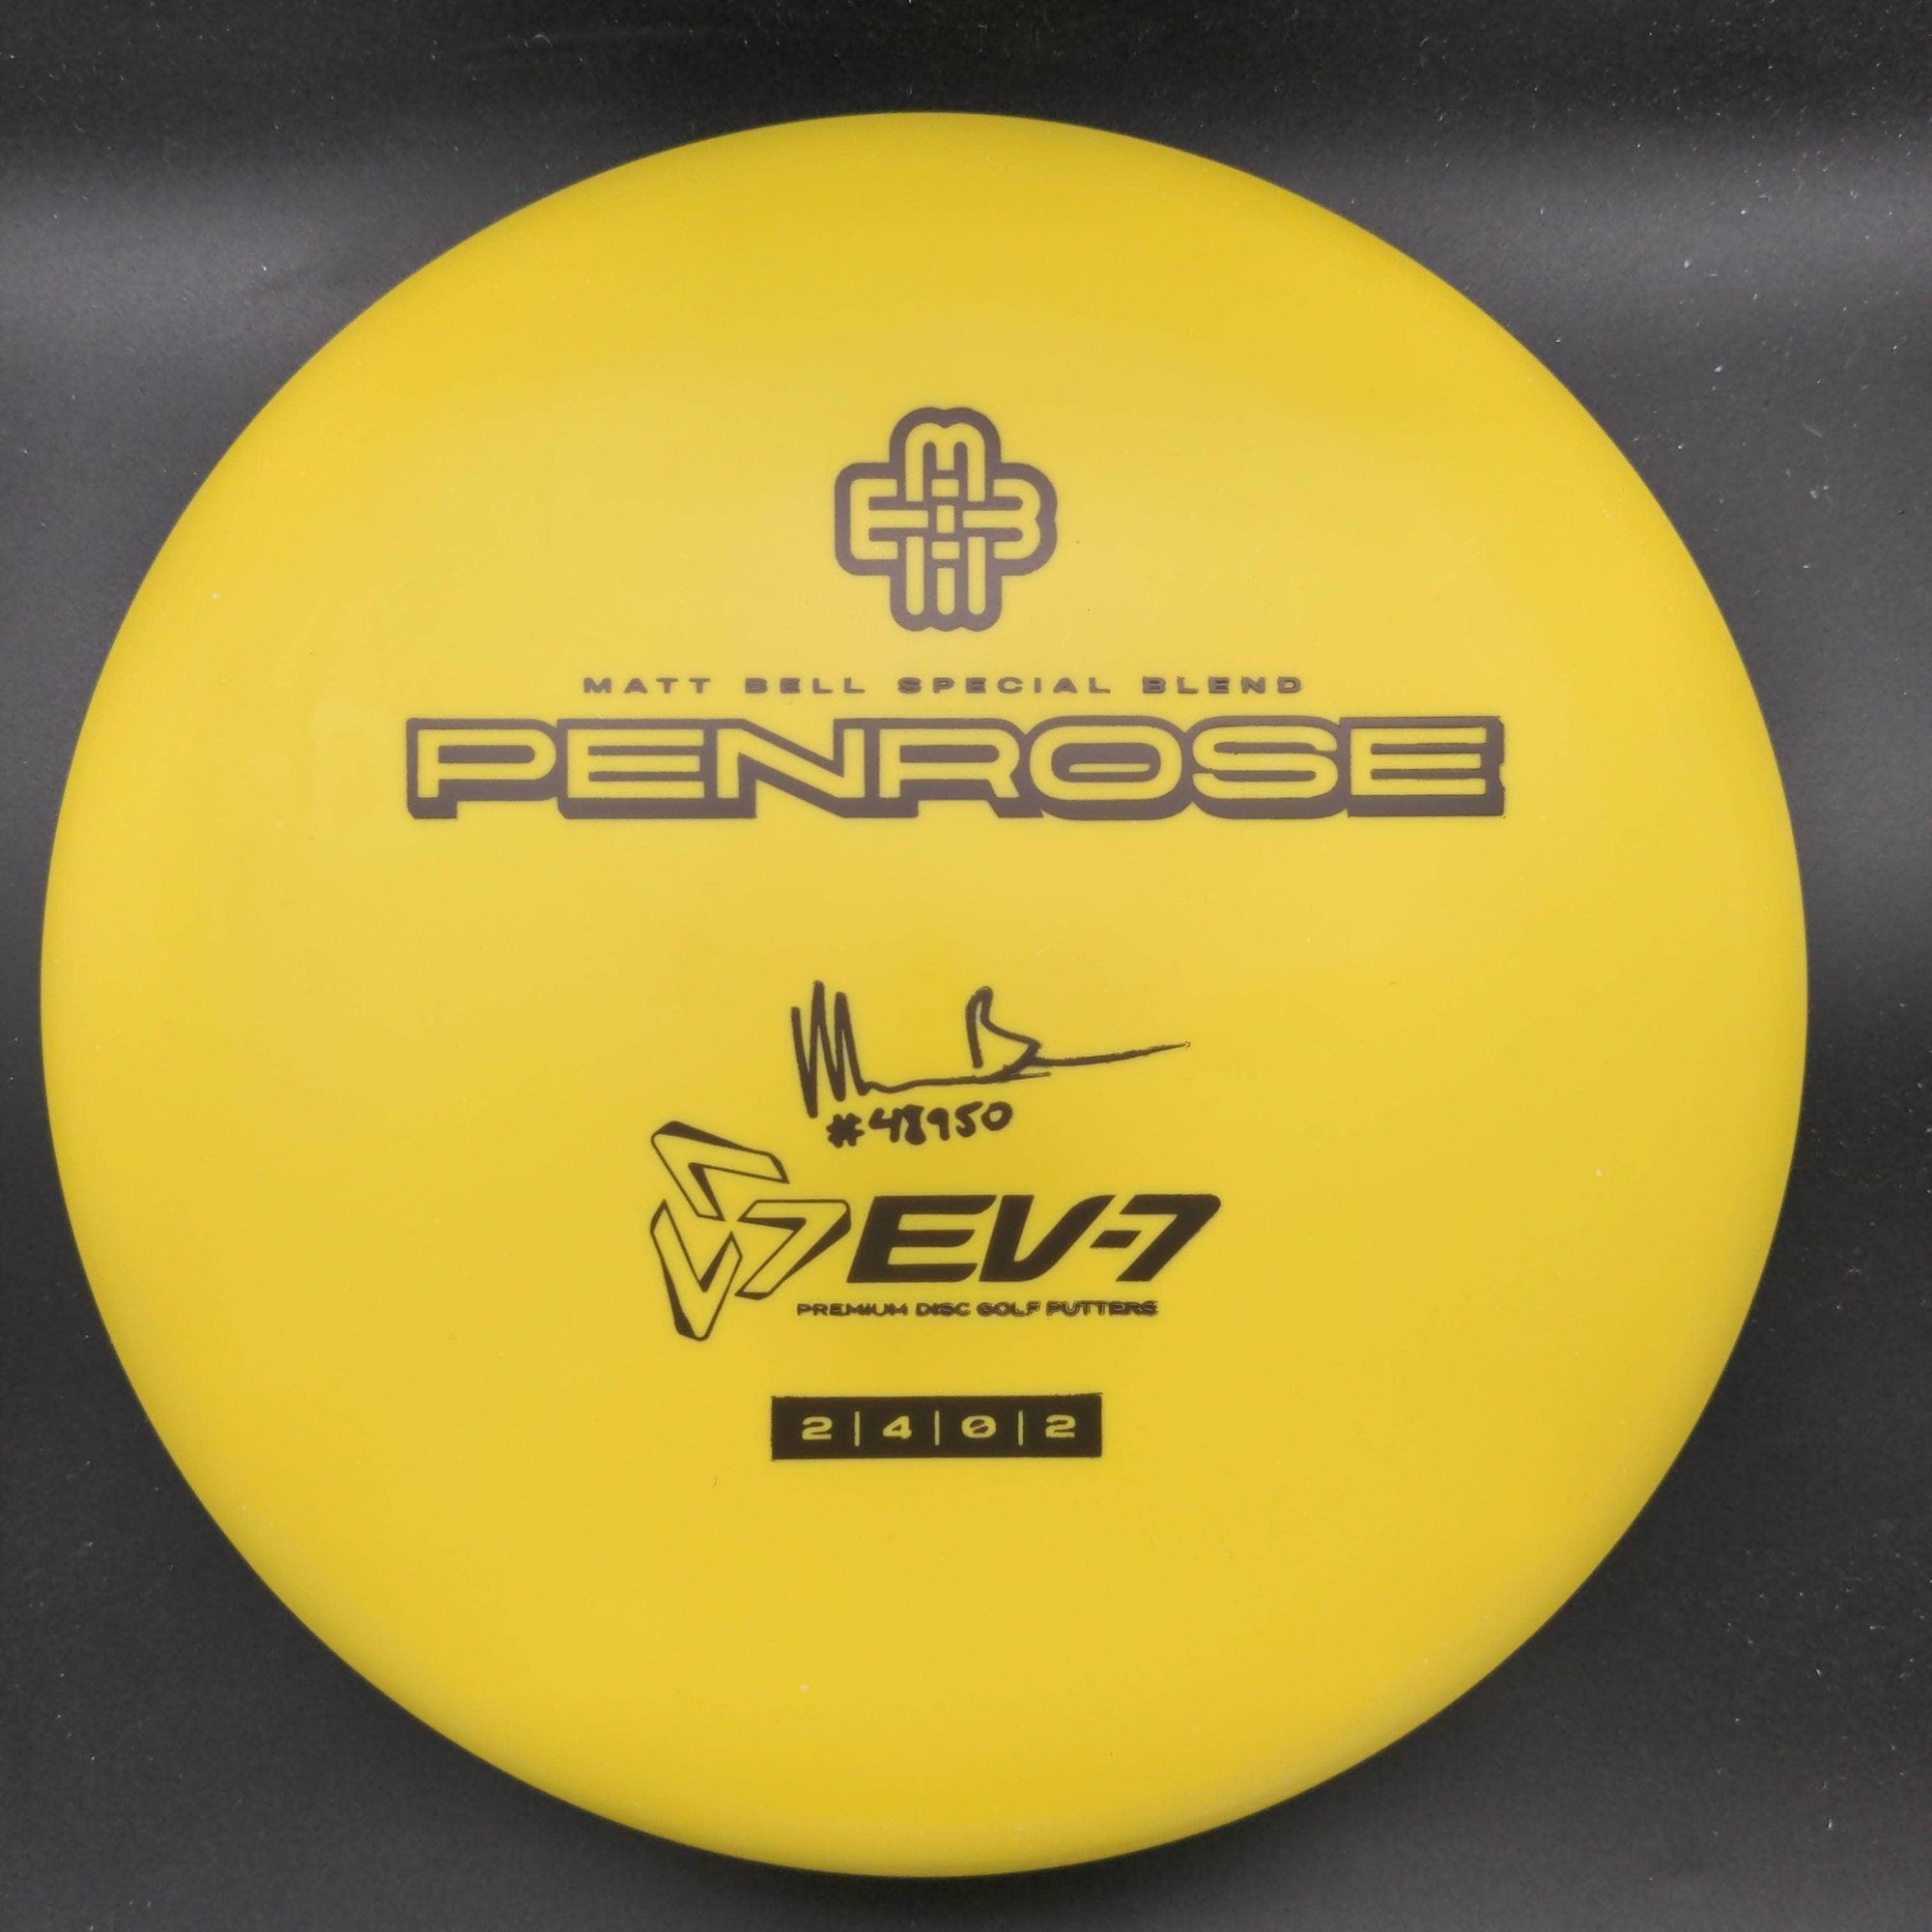 Ev7 Putter Yellow Black Stamp 172g Penrose, Matt Bell, Special Blend Plastic 2023